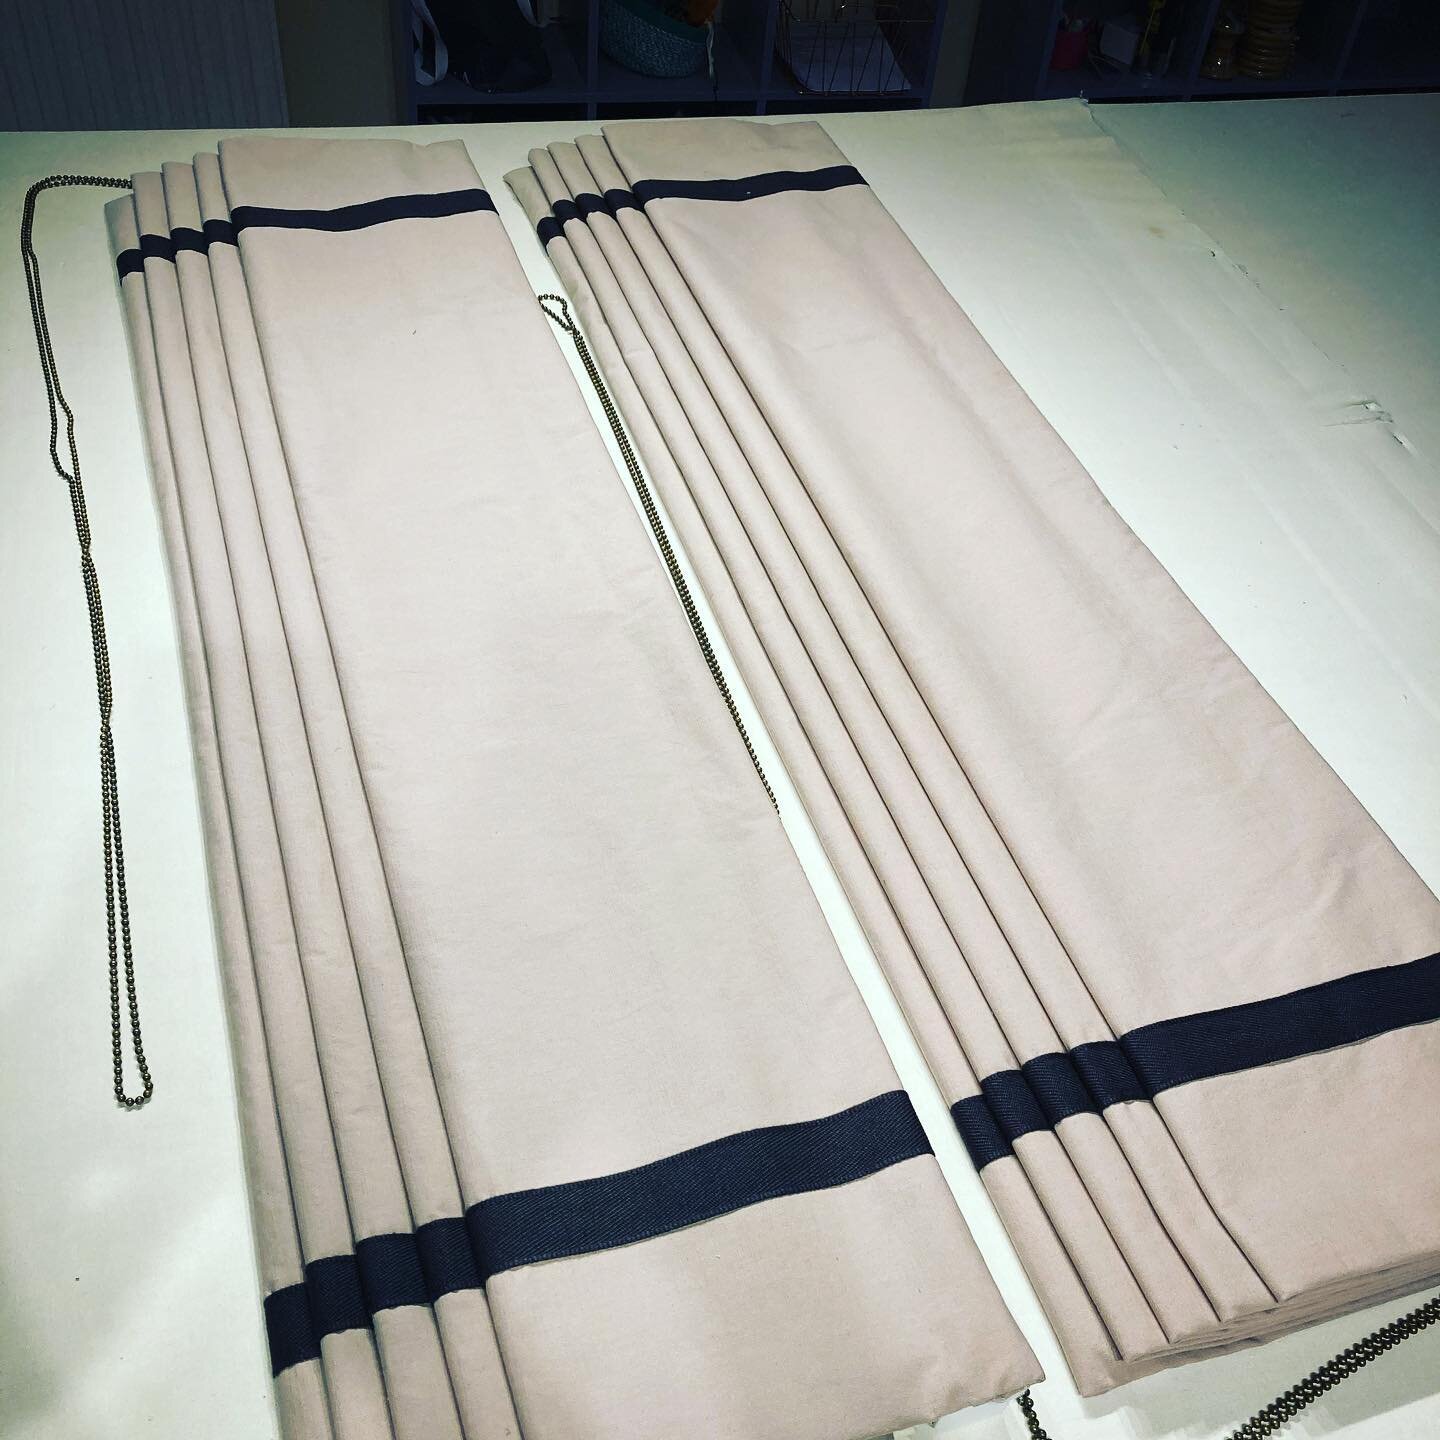 Channelling the brilliant interior designer @beataheuman in these Roman blinds using @romo_fabrics and @samuelandsons grosgrain ribbon trim ⚡️⚡️⚡️ #romanblinds #trim #blackout #bedroom #bedroomdecor #bedroominspo #hvjinteriors #harrietvaughanjonesint